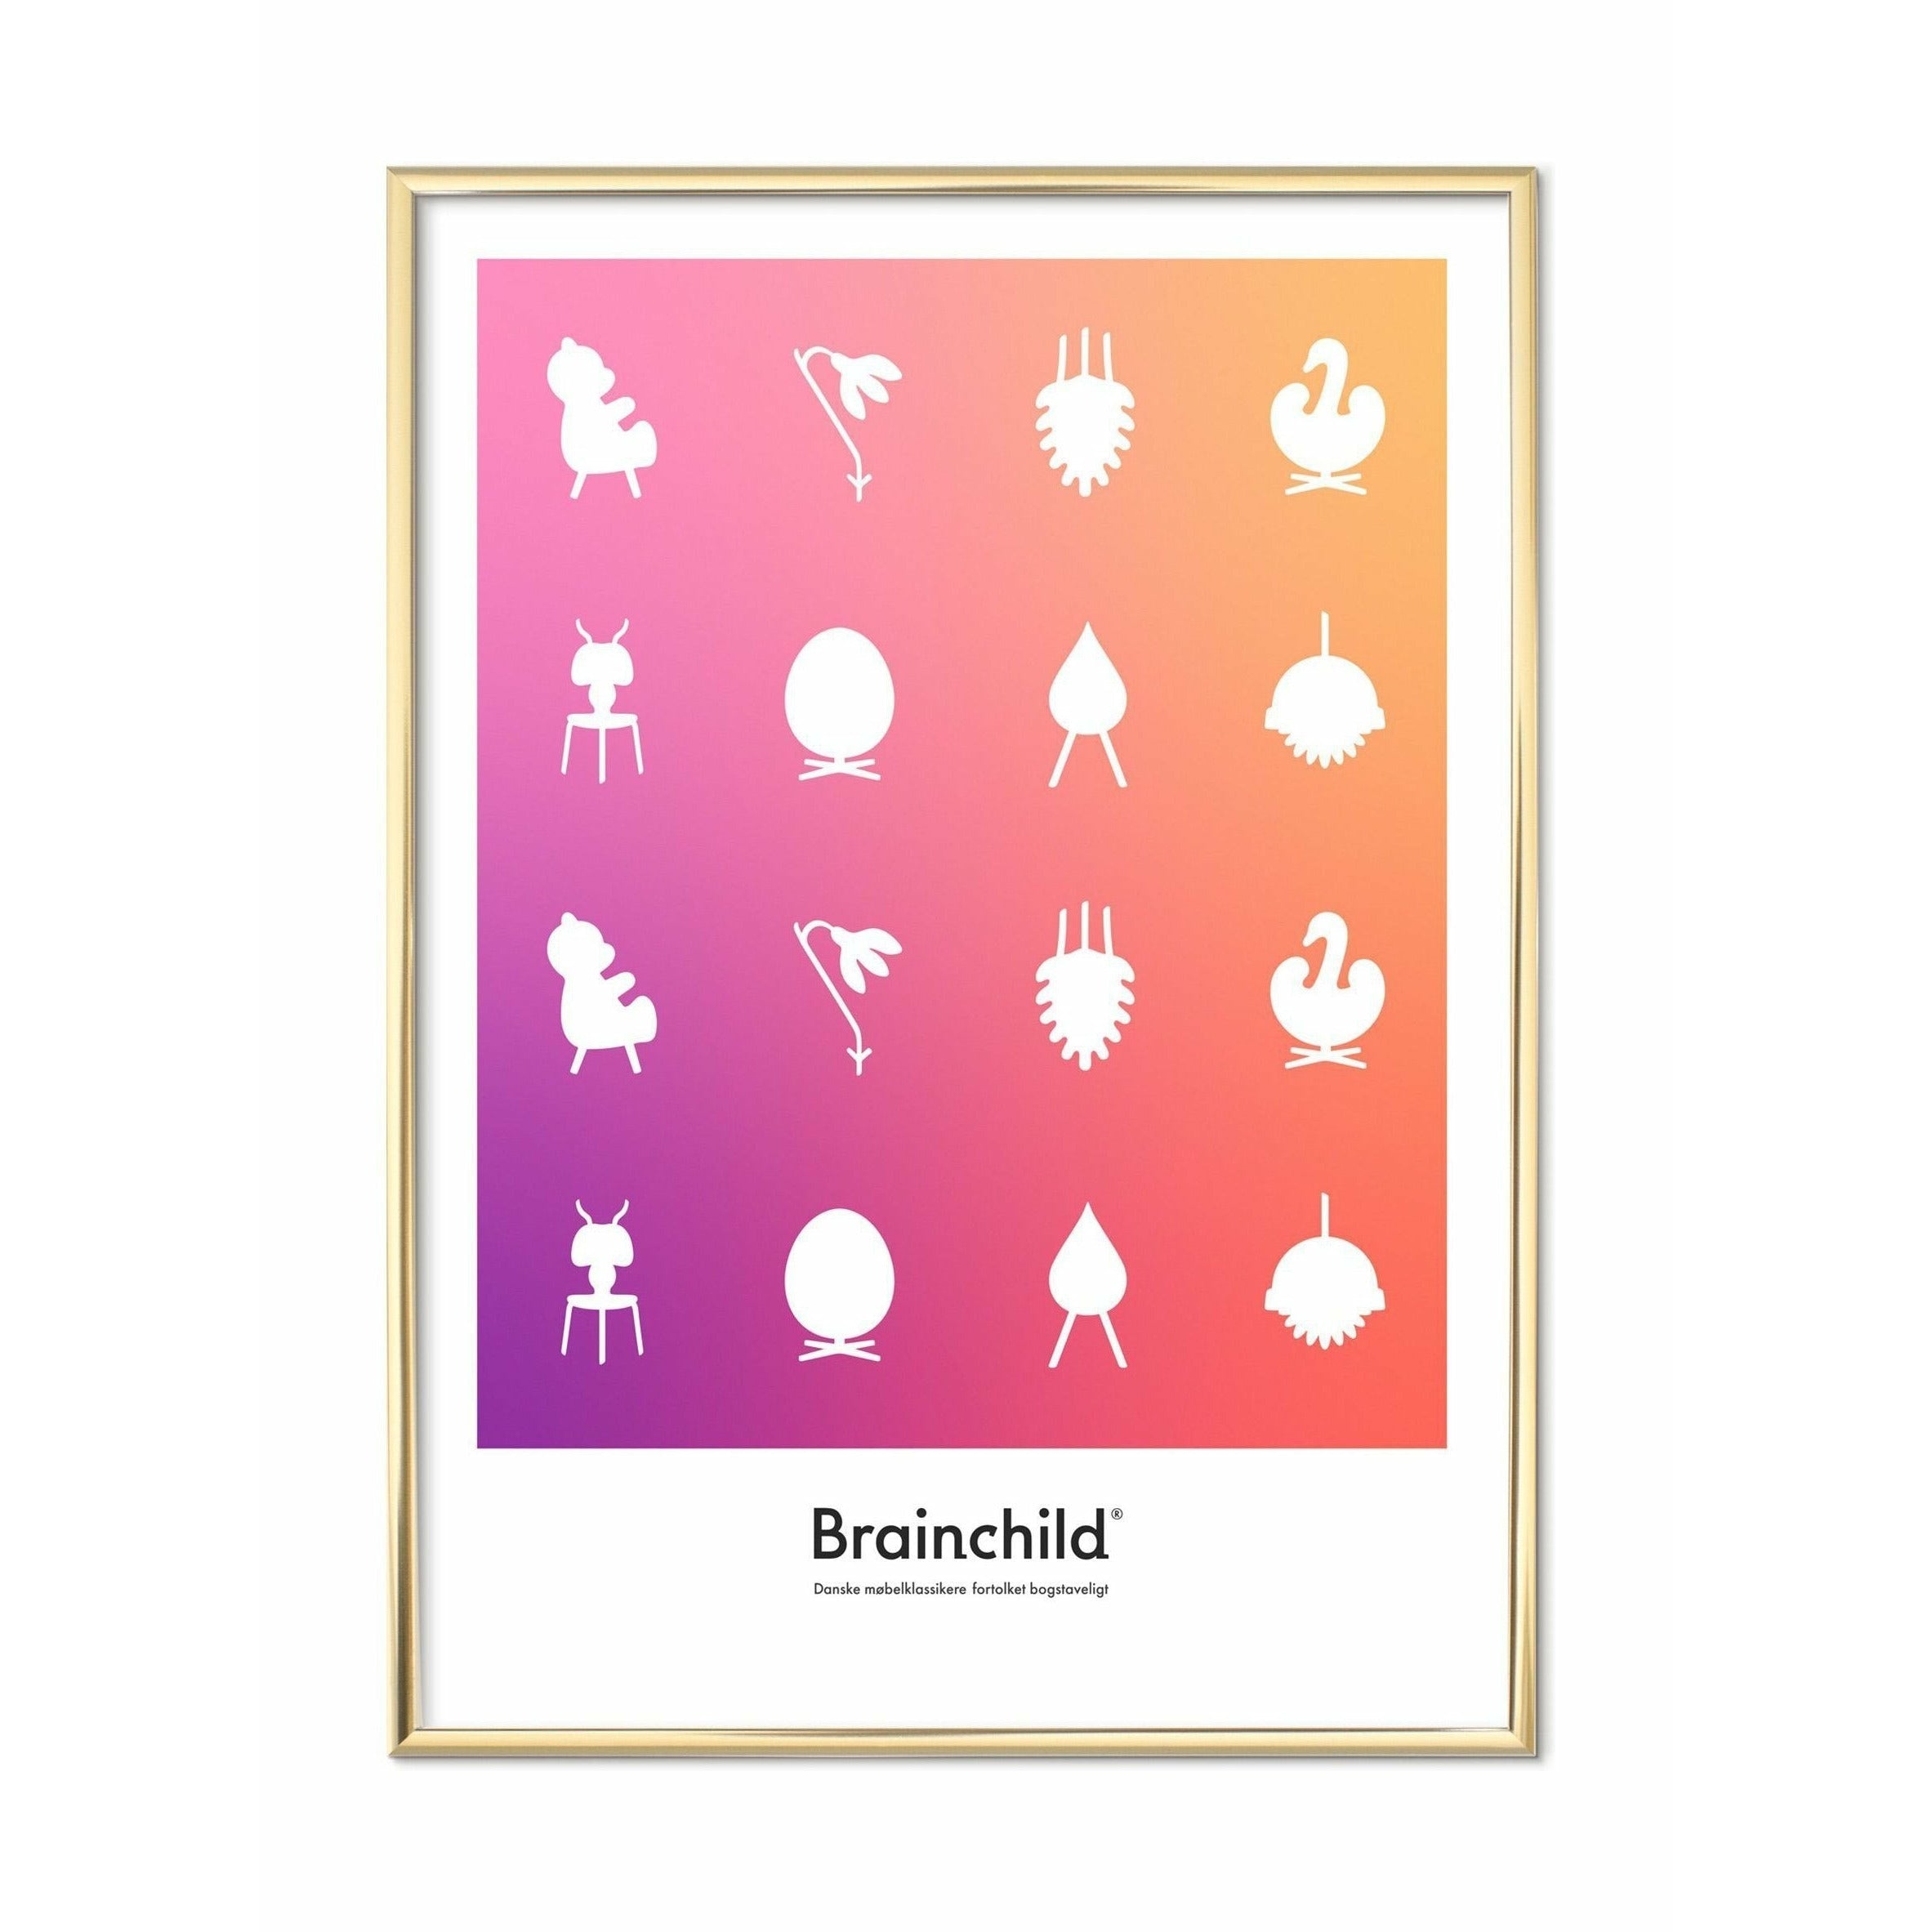 Brainchild Ontwerppictogram Poster, messing gekleurd frame A5, kleur